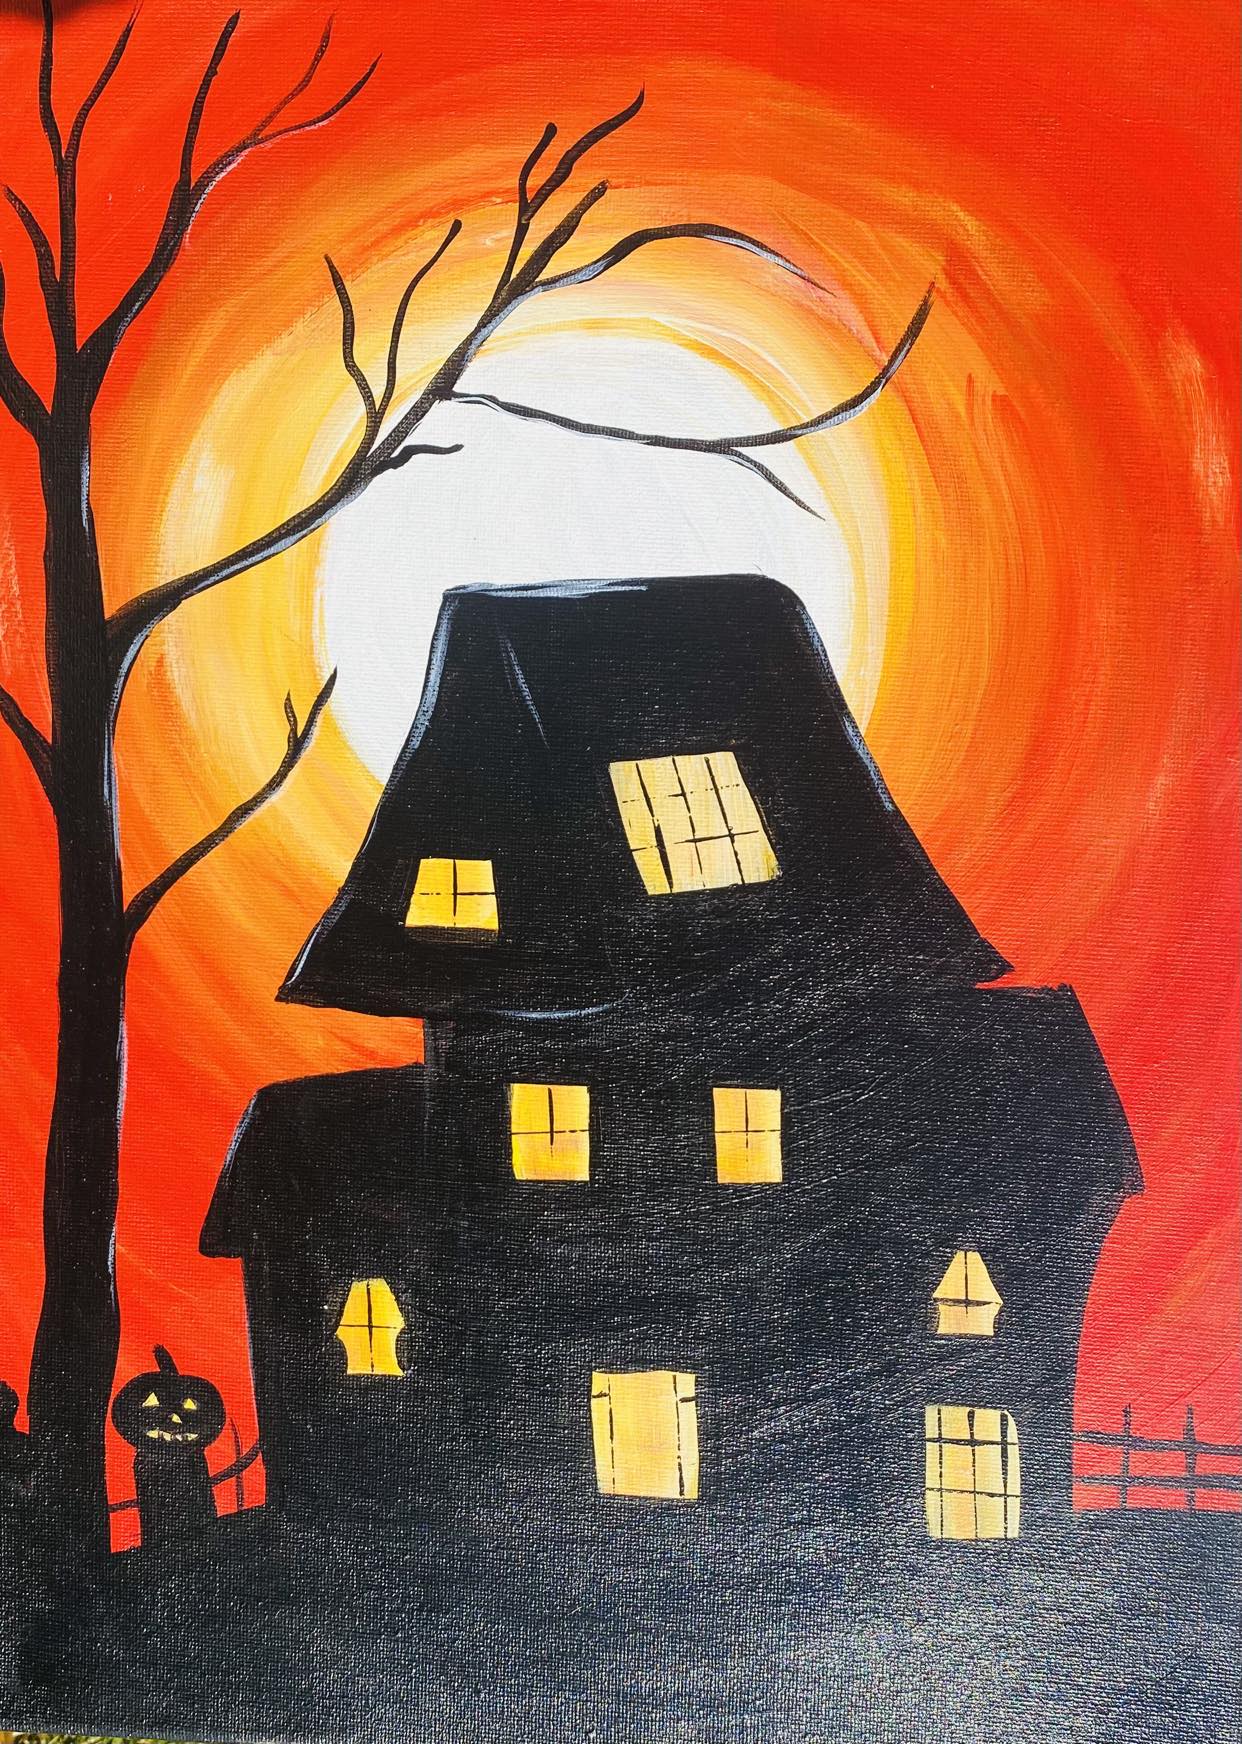 Haunted House Orange Sky